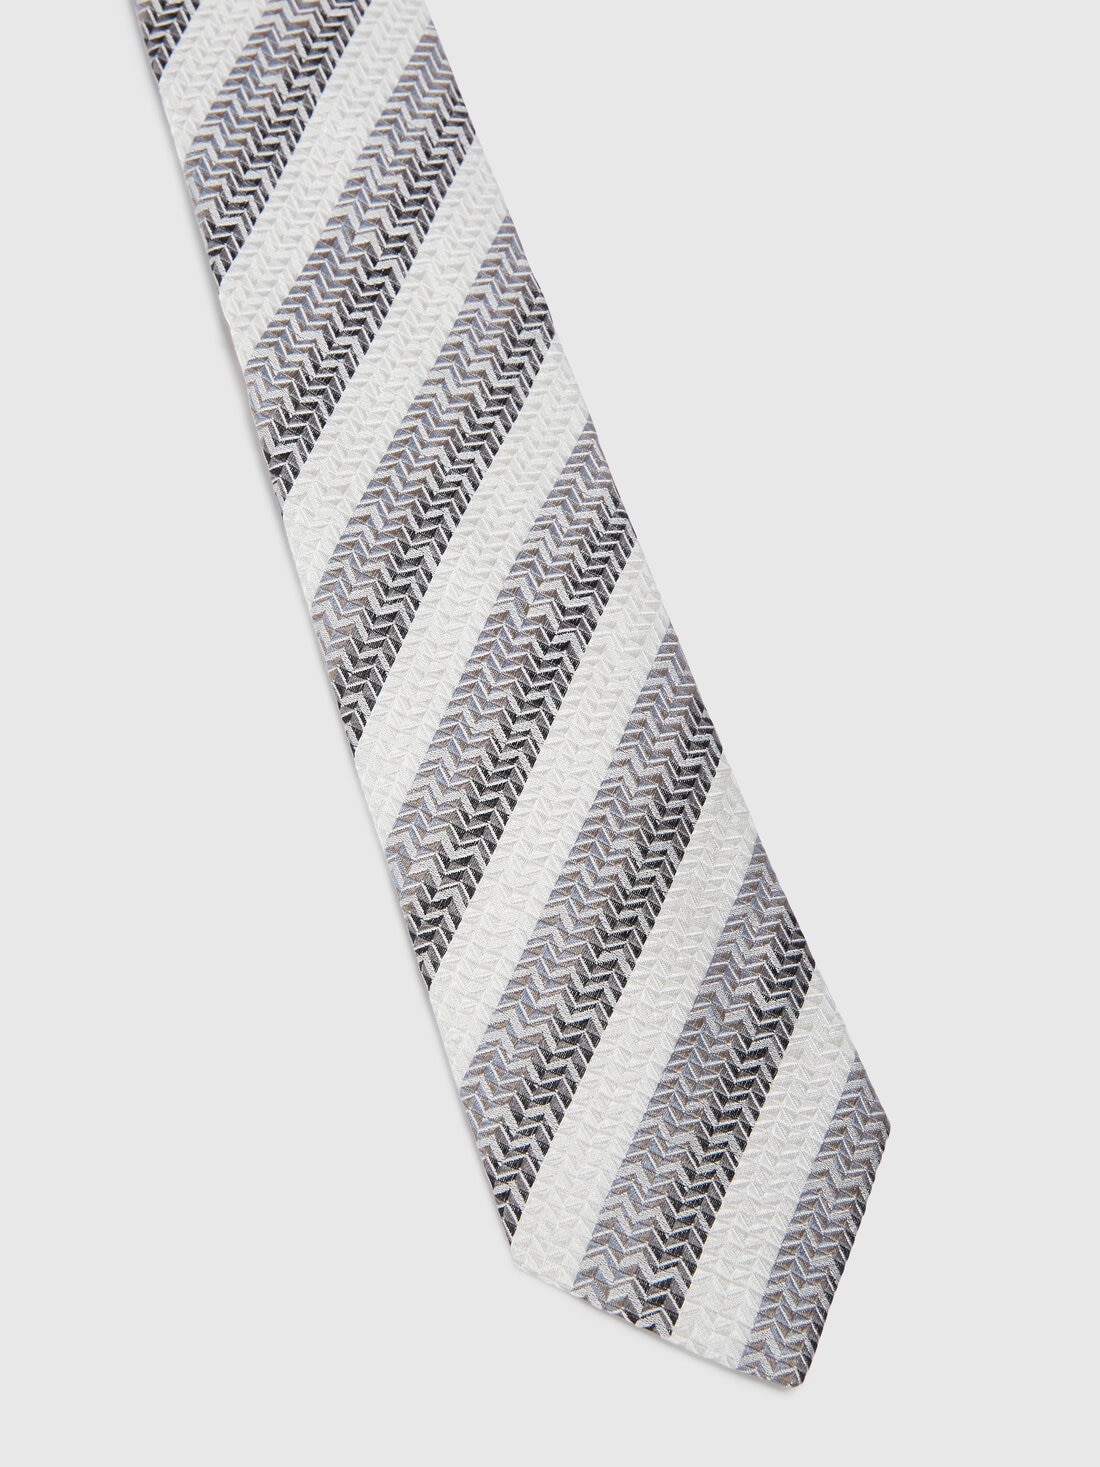 Silk tie with chevron pattern, Multicoloured  - 8053147141909 - 1